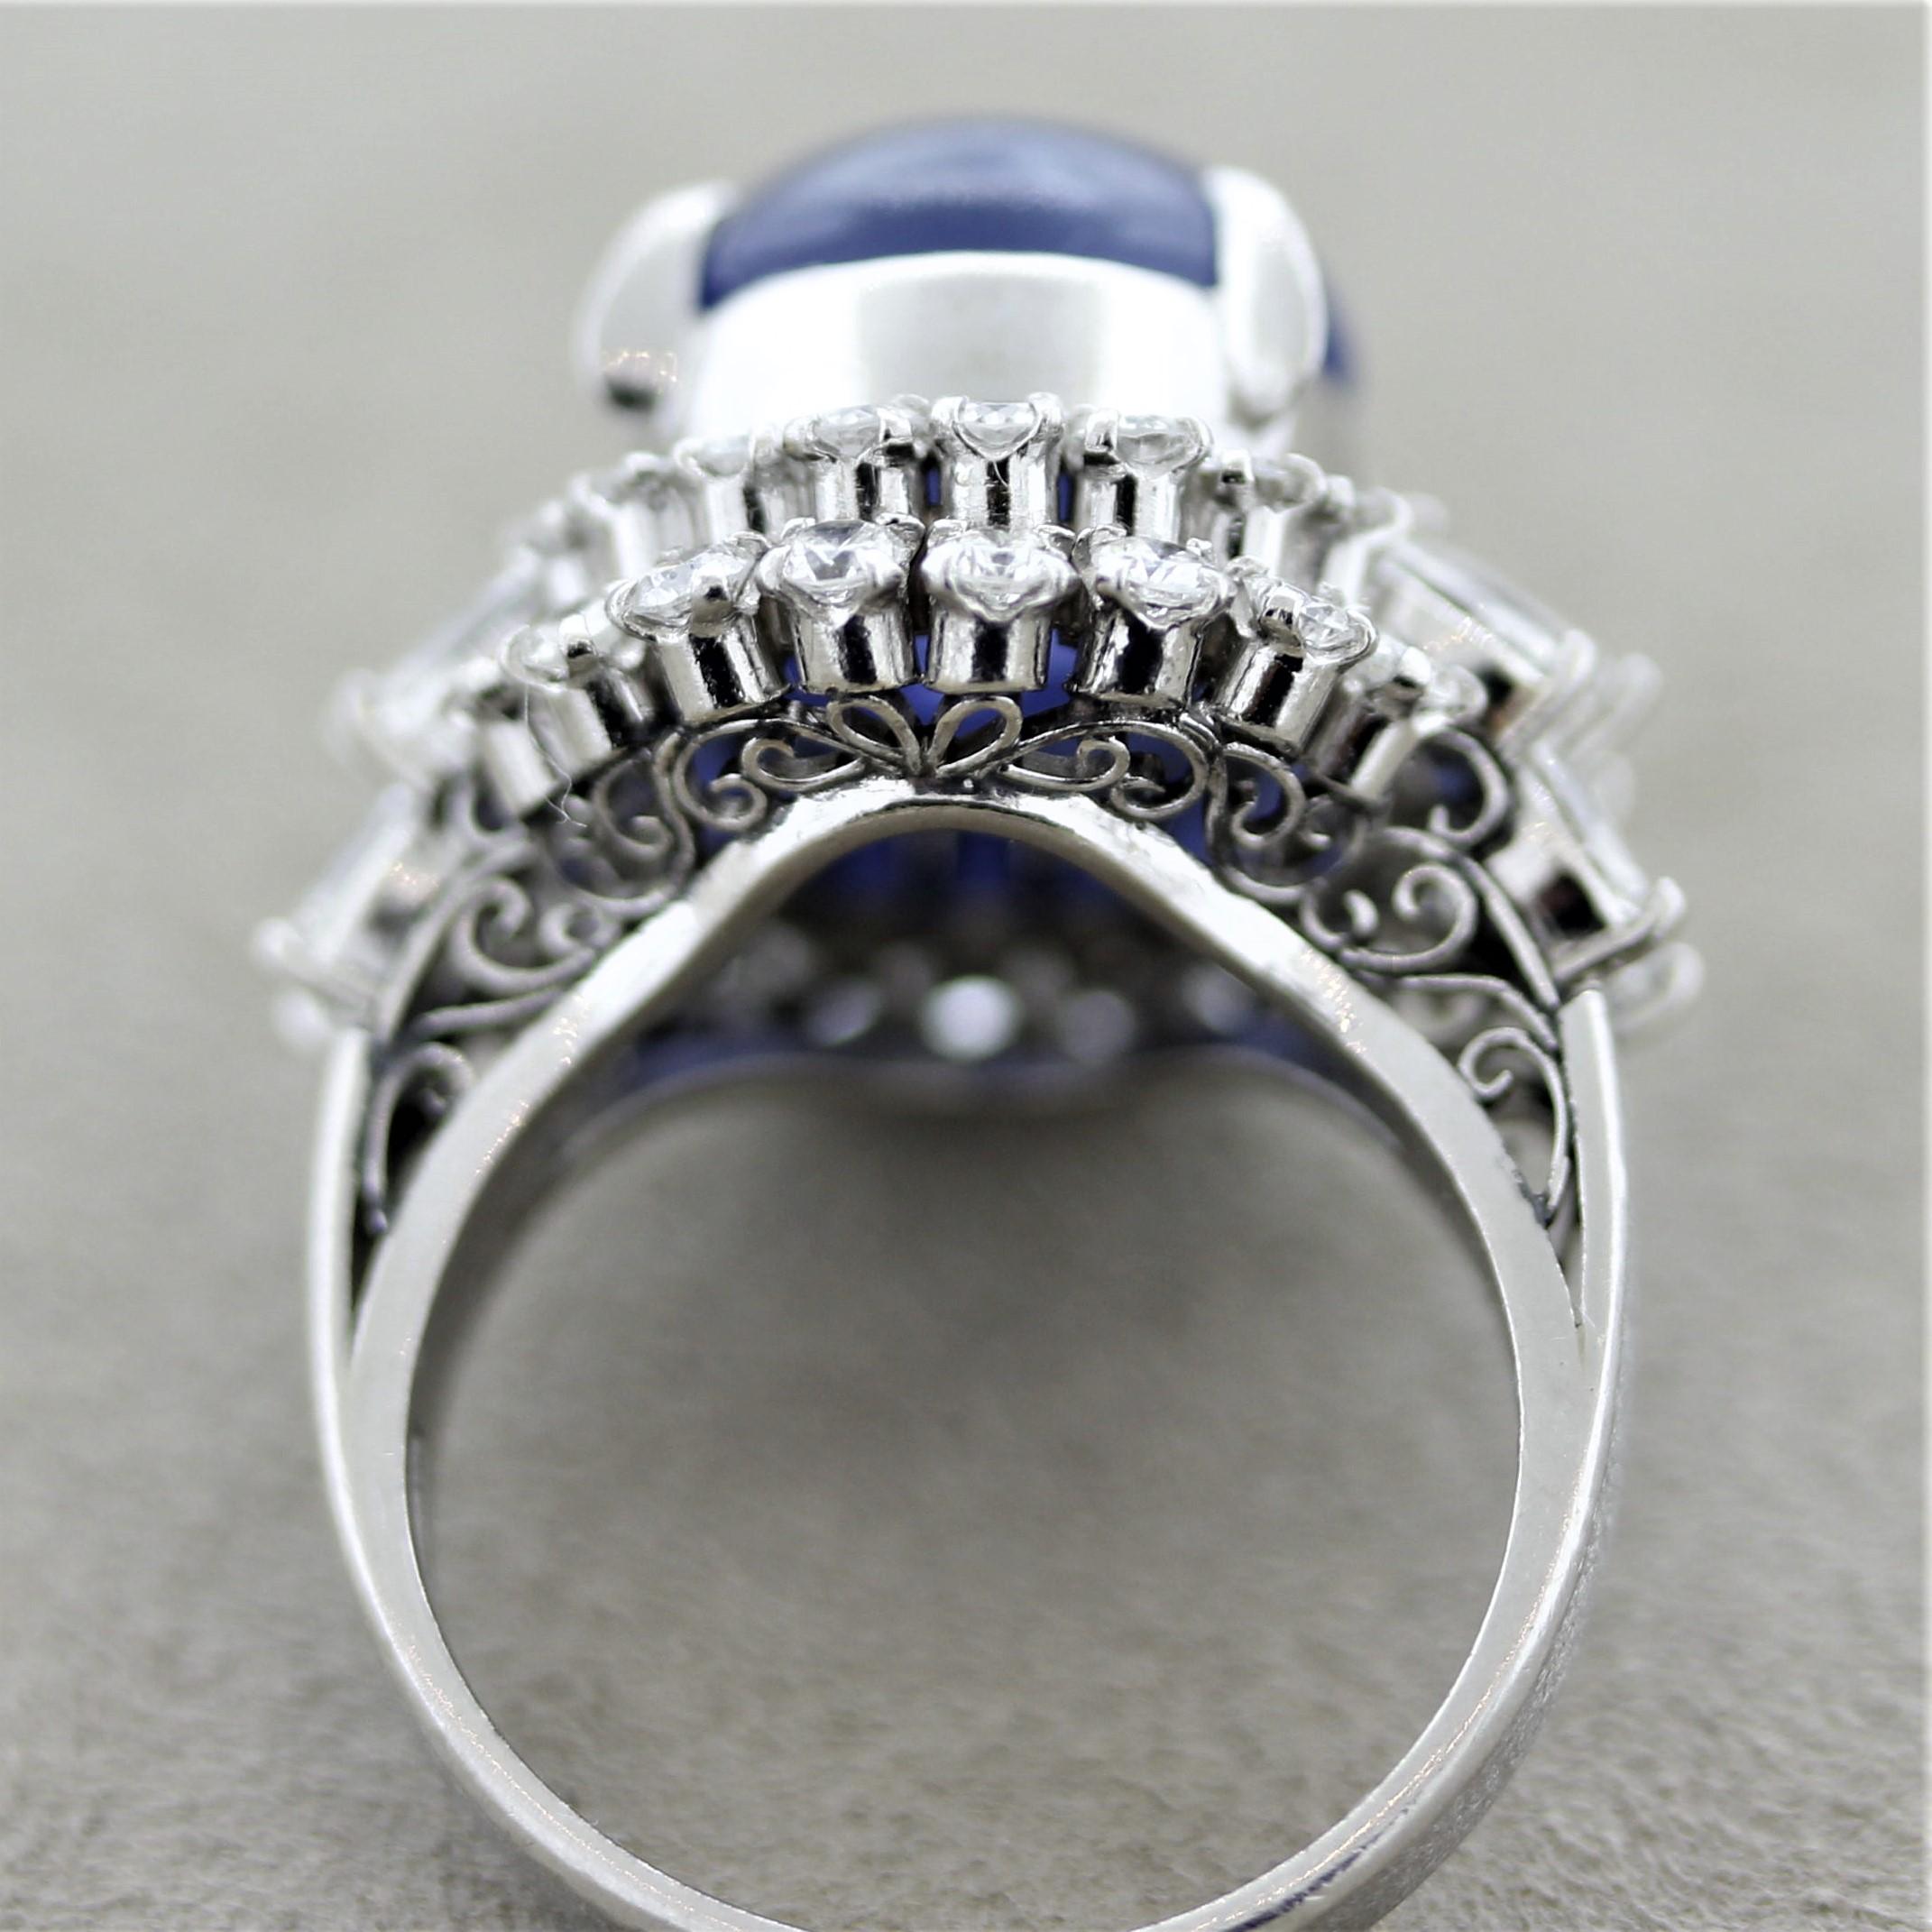 star sapphire ring with diamonds